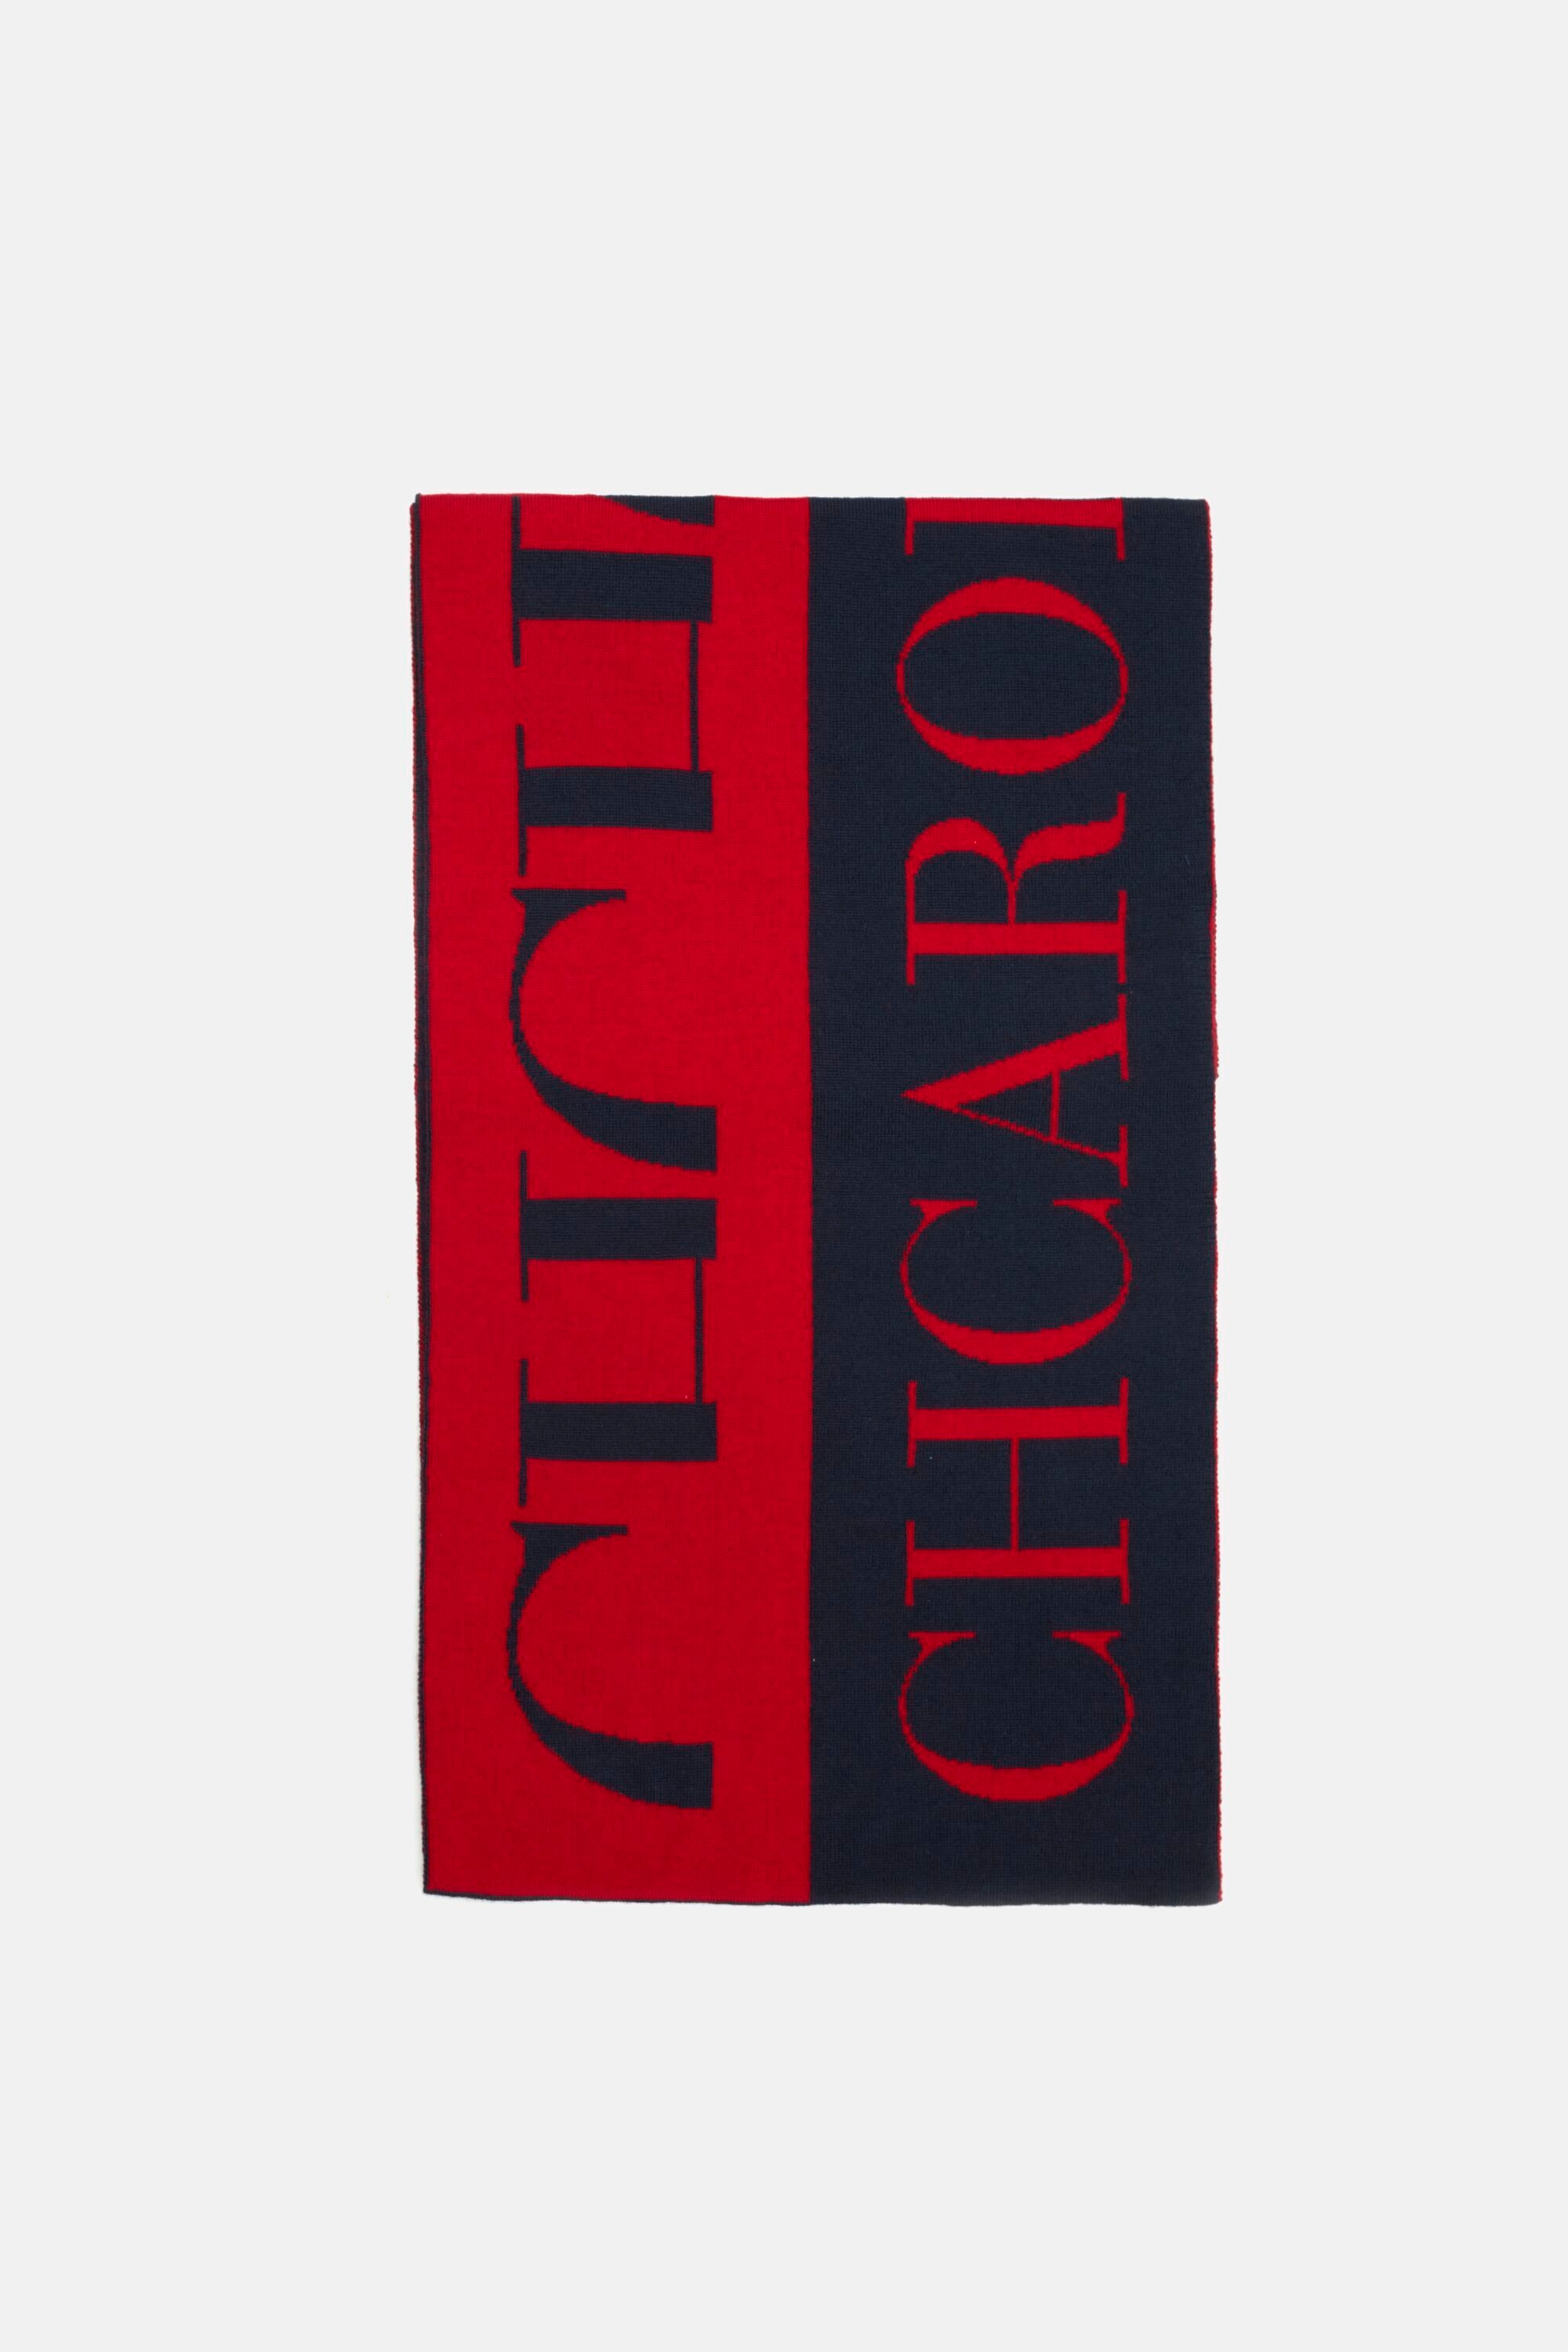 CH wool-blend scarf navy blue/red - CH Herrera United States